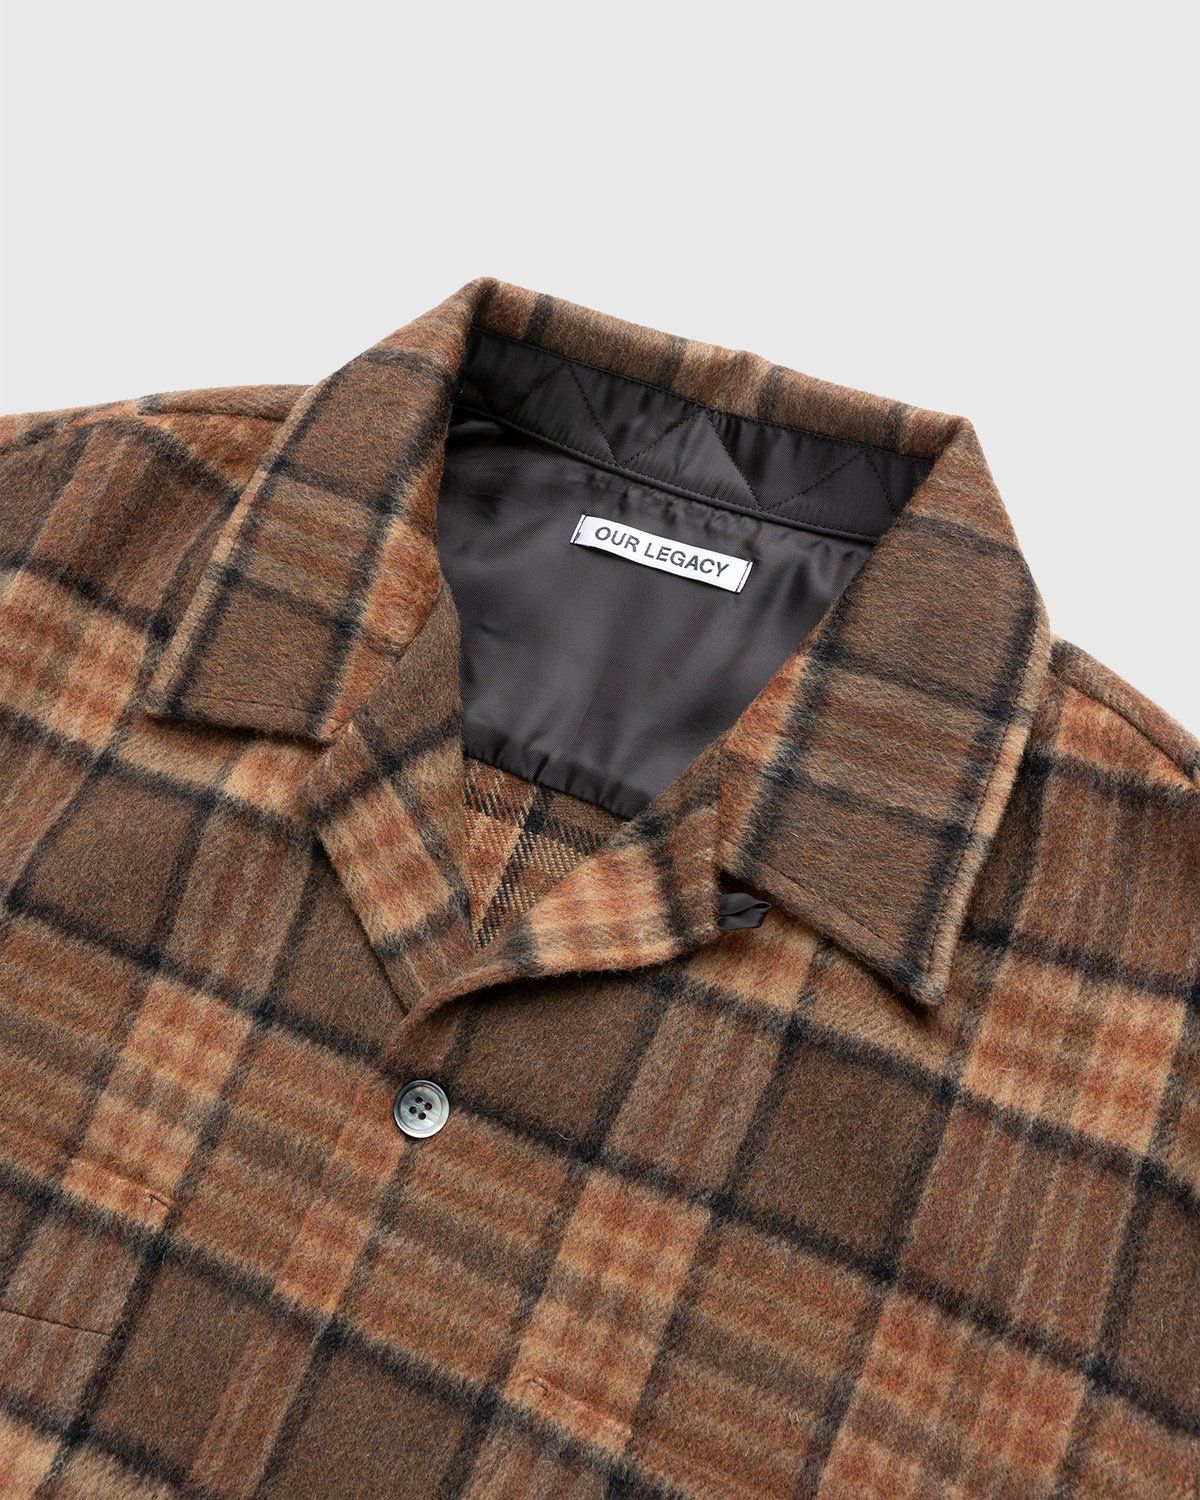 Our Legacy – Heusen Shirt Fox Brown Check - Shirts - Brown - Image 3